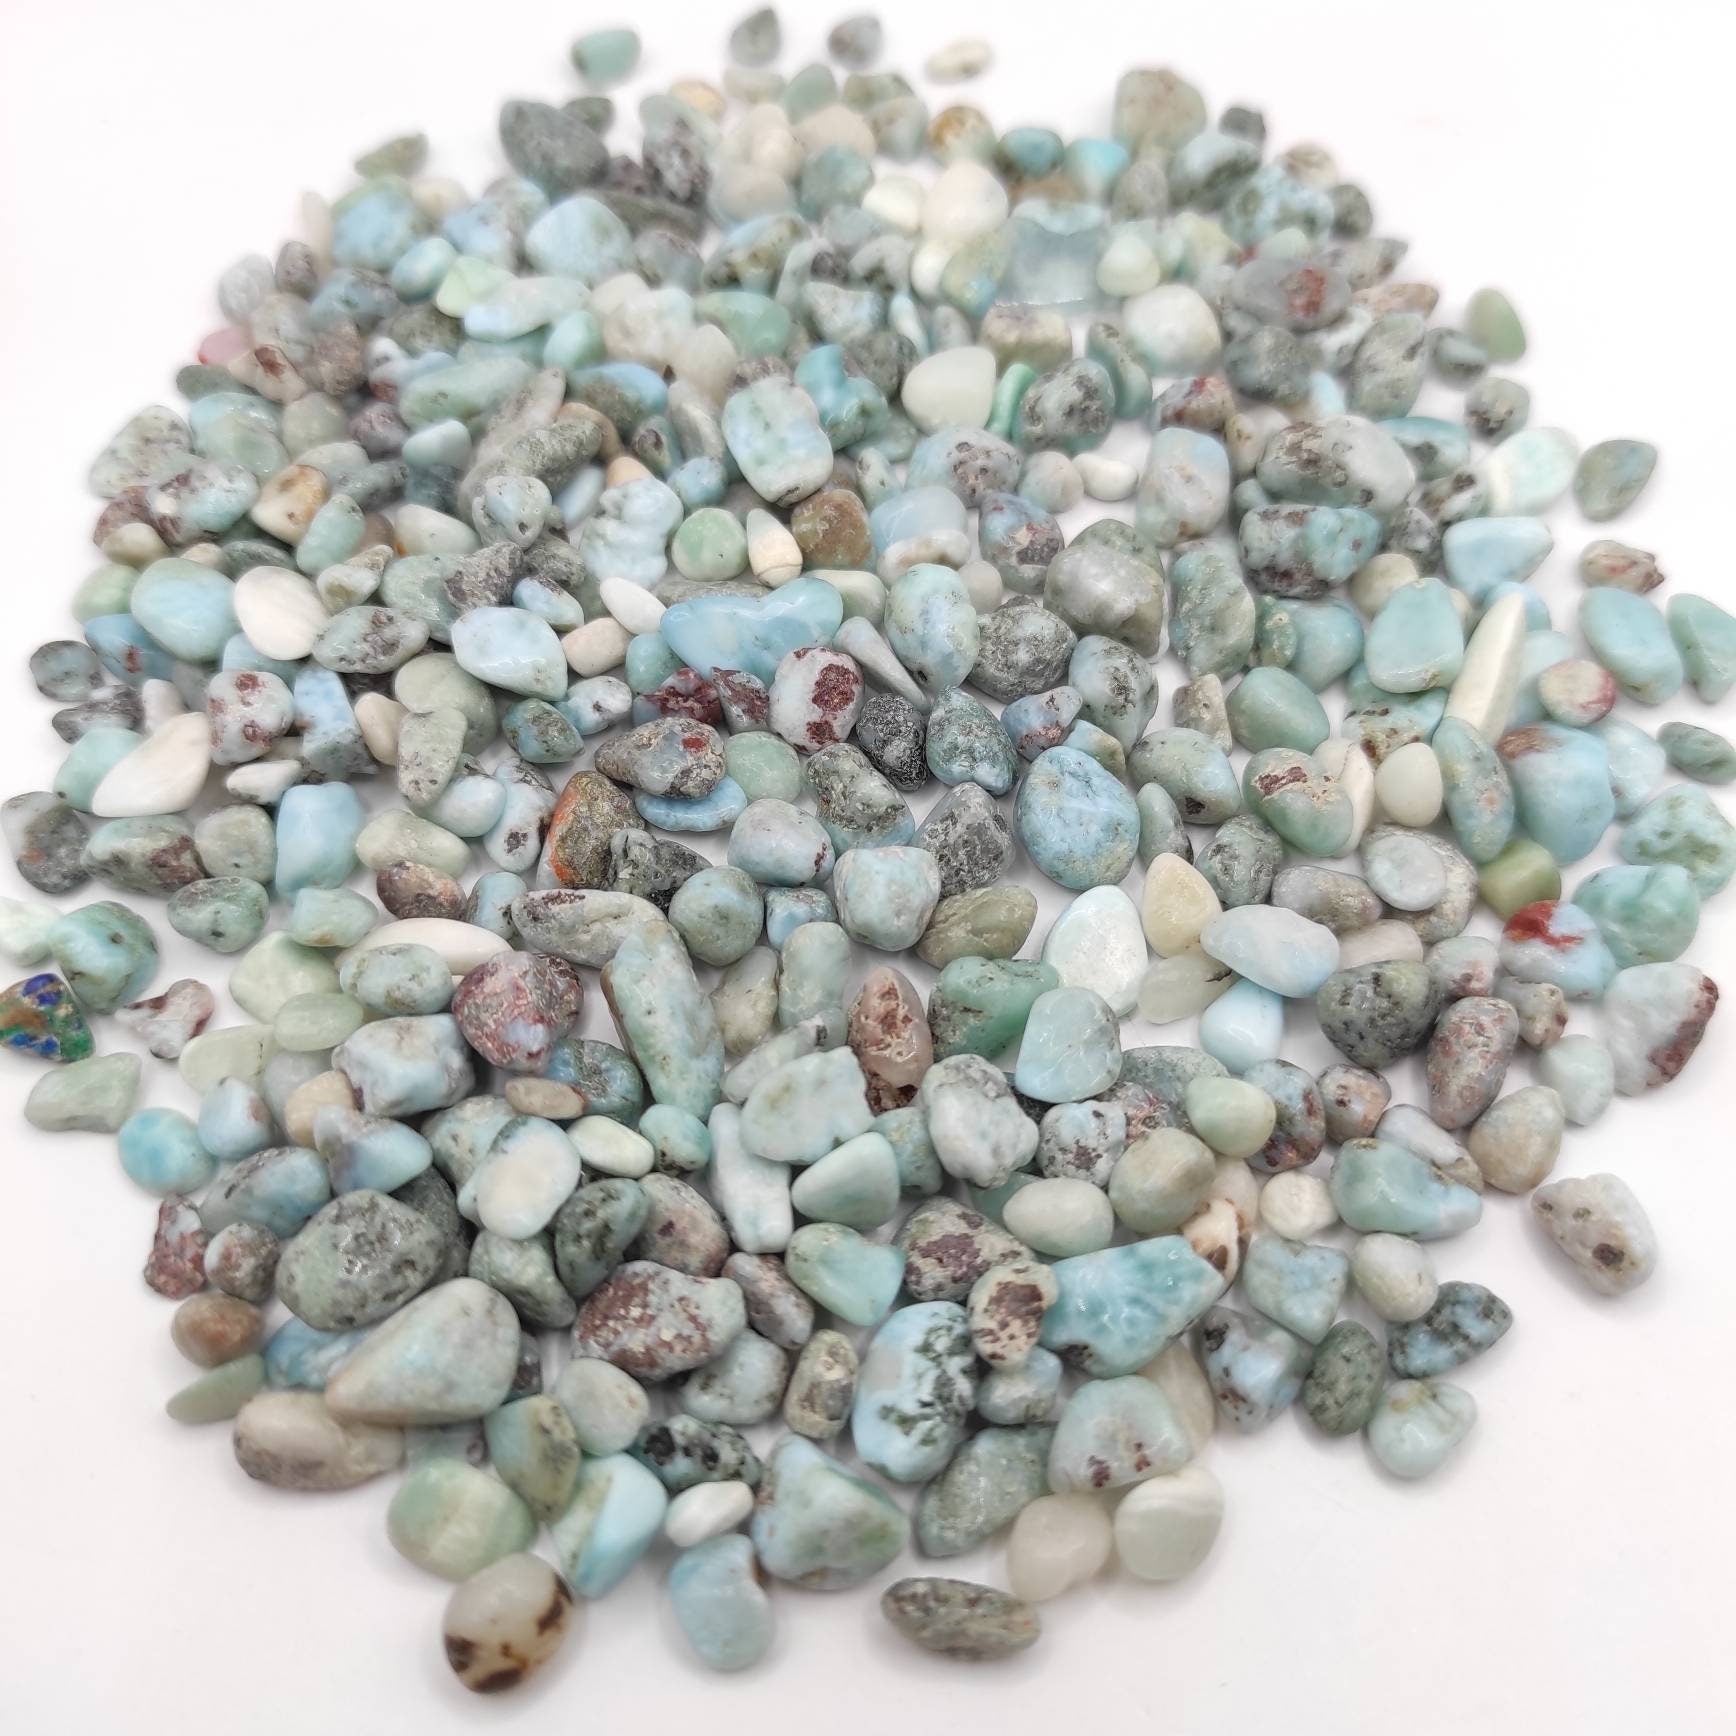 50/100g Larimar Gravel Lot 5-10mm Small Larimar Chips Tumbled Blue Larimar Dominican Republic Stone Natural Gemstones Loose Gems Untreated